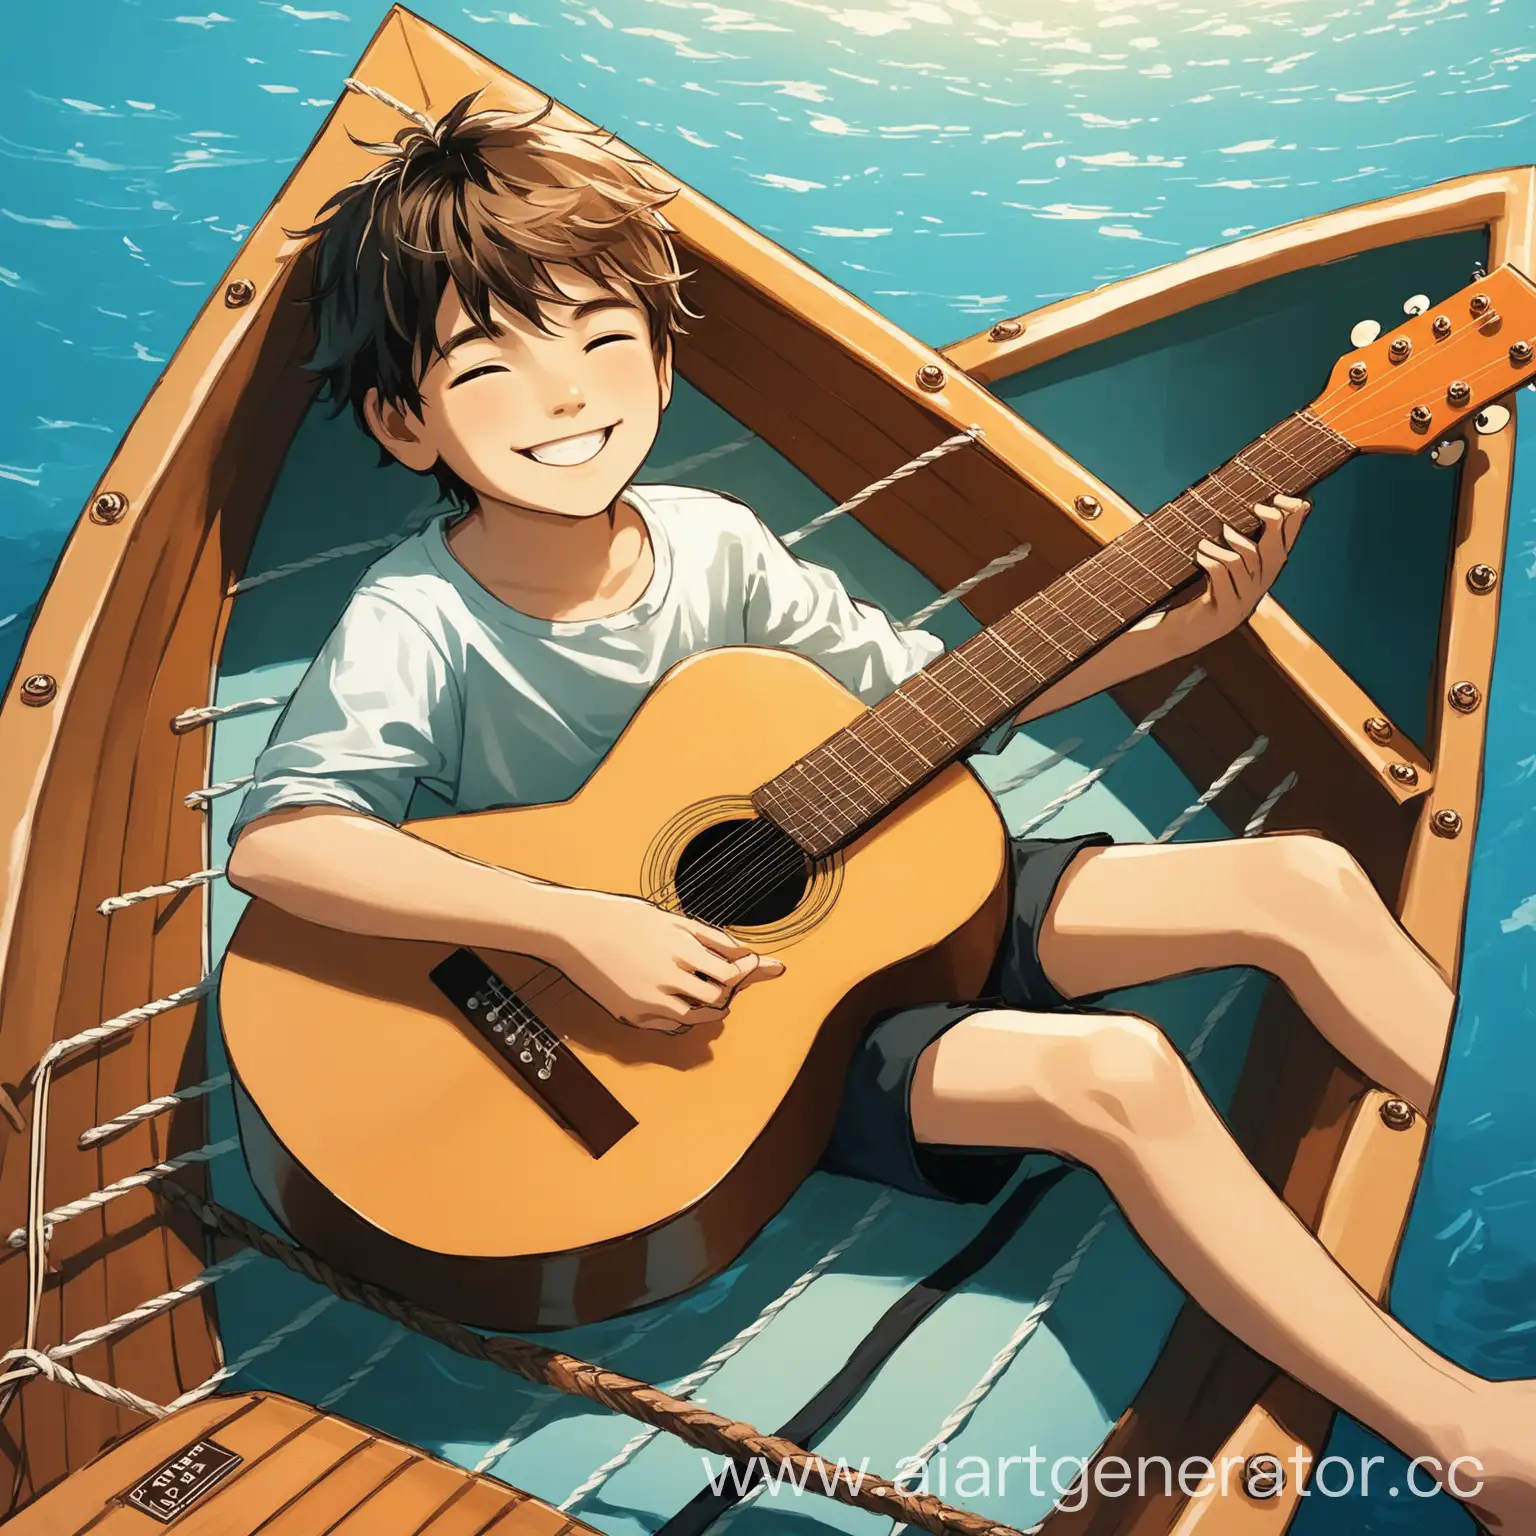 Smiling-Boy-Playing-Guitar-in-Boat